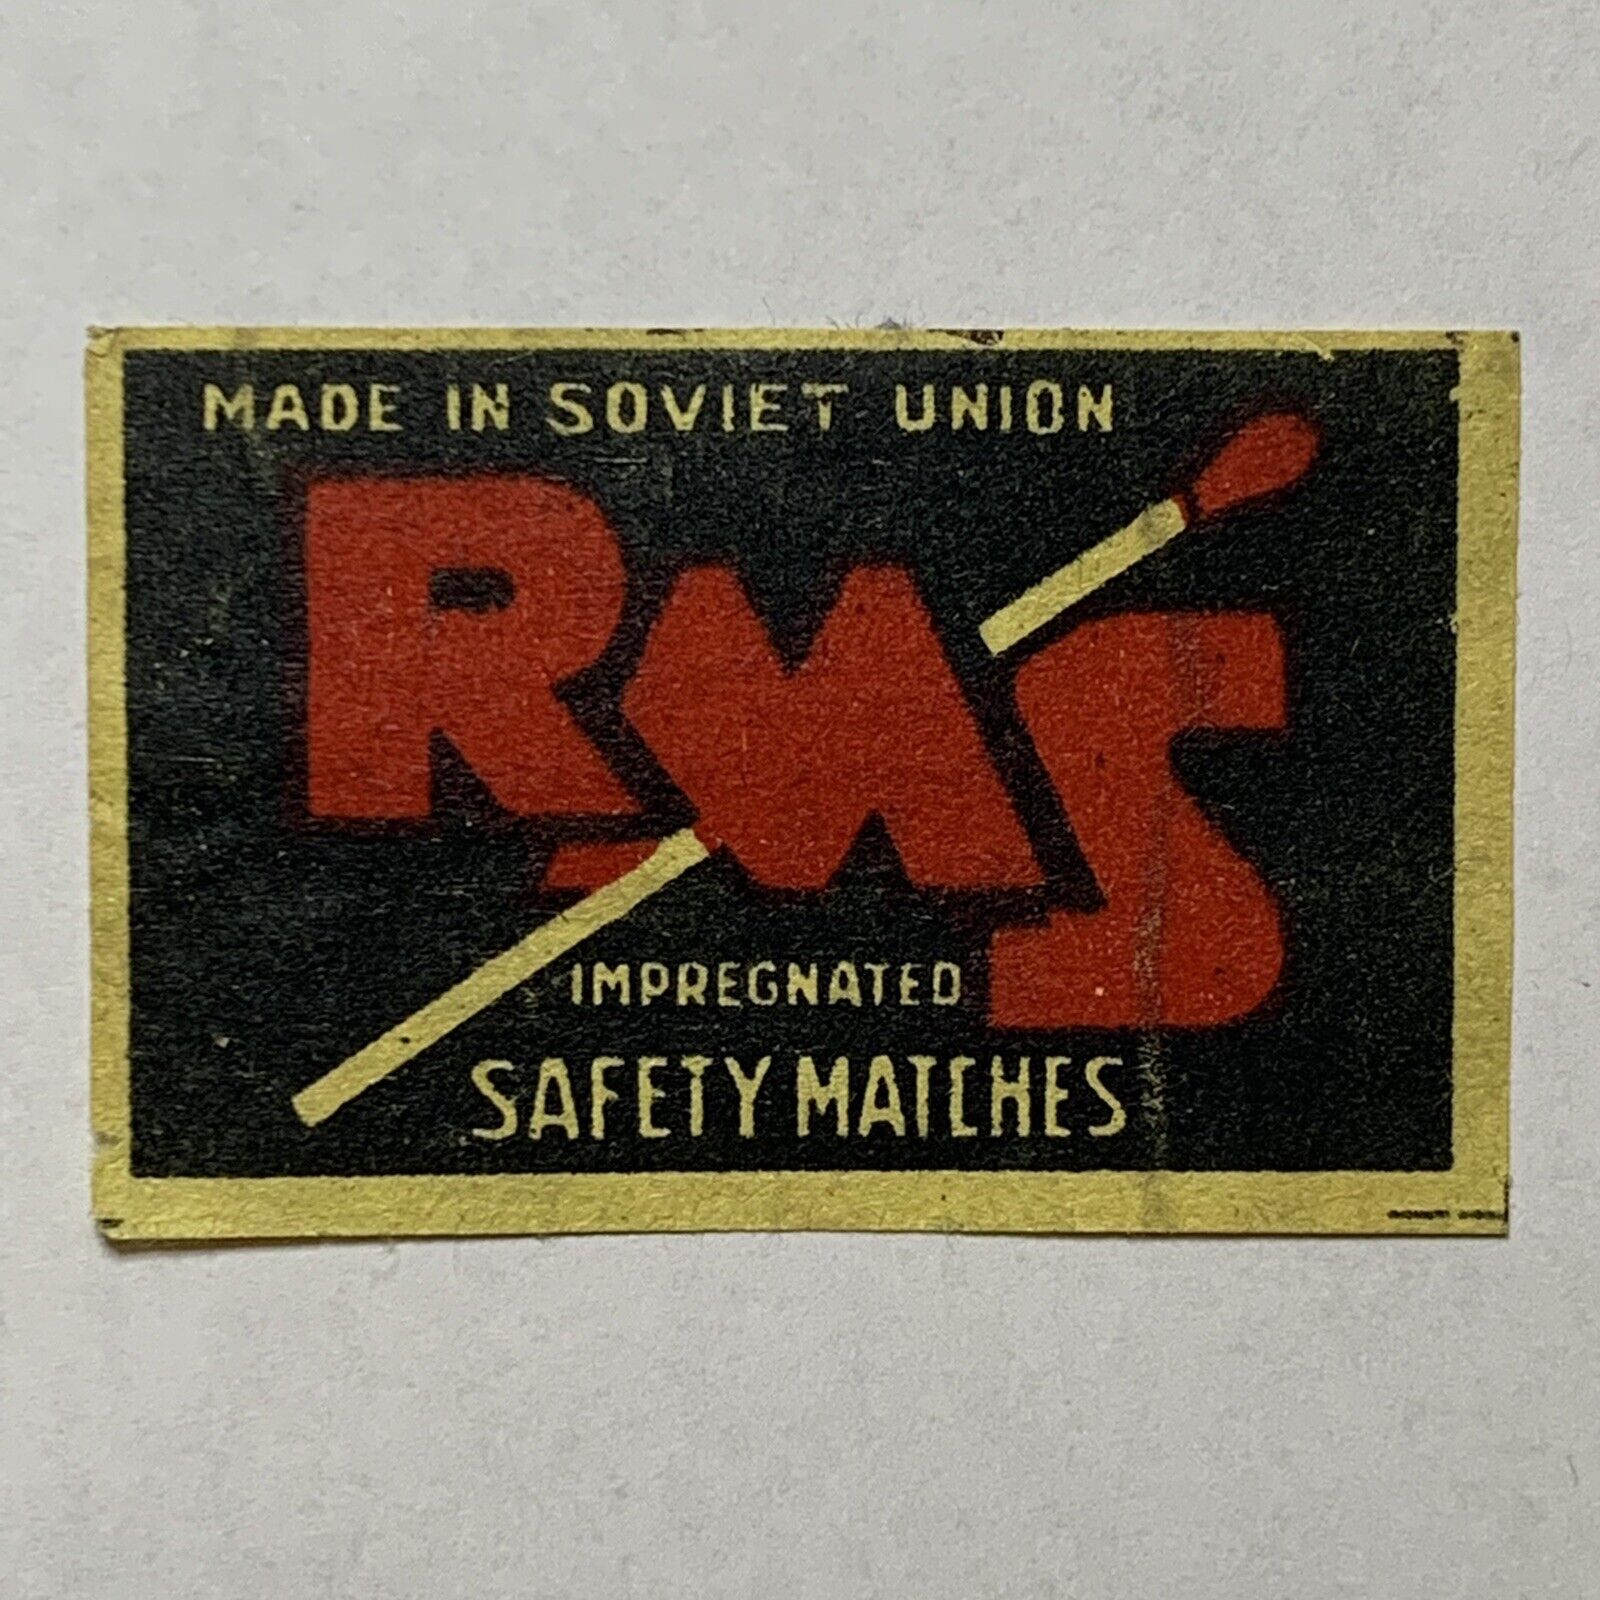 SOVIET UNION VINTAGE RMS MATCHBOX LABEL IMPREGNATED